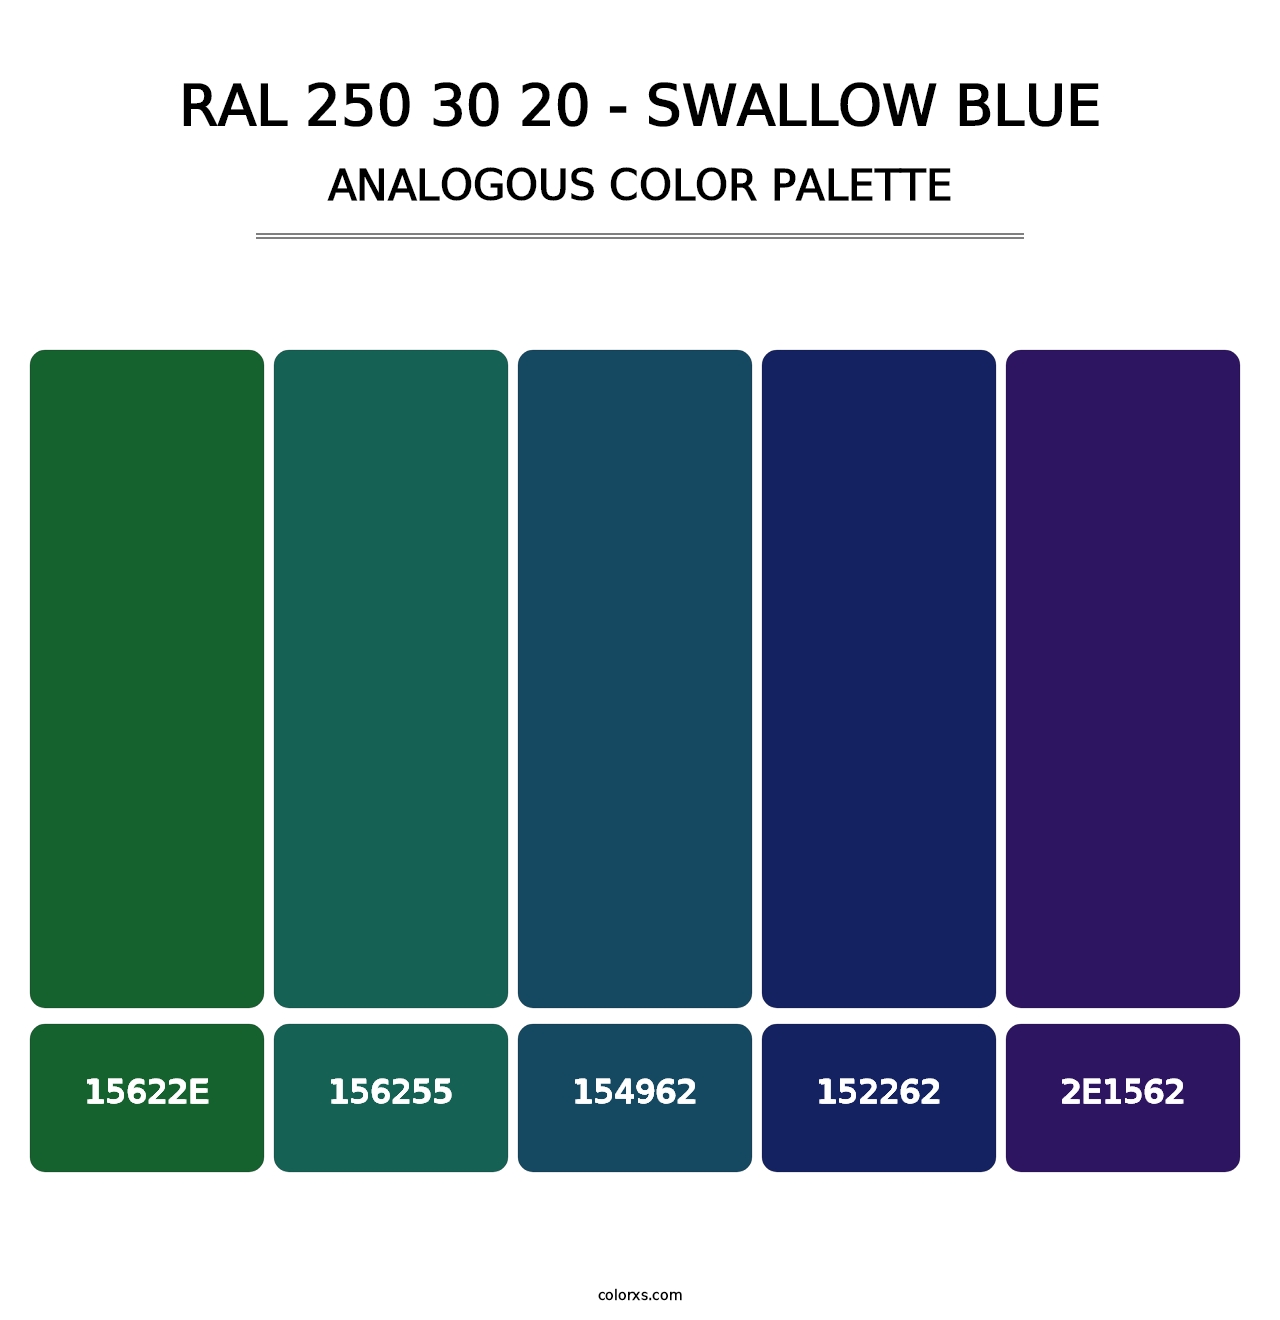 RAL 250 30 20 - Swallow Blue - Analogous Color Palette